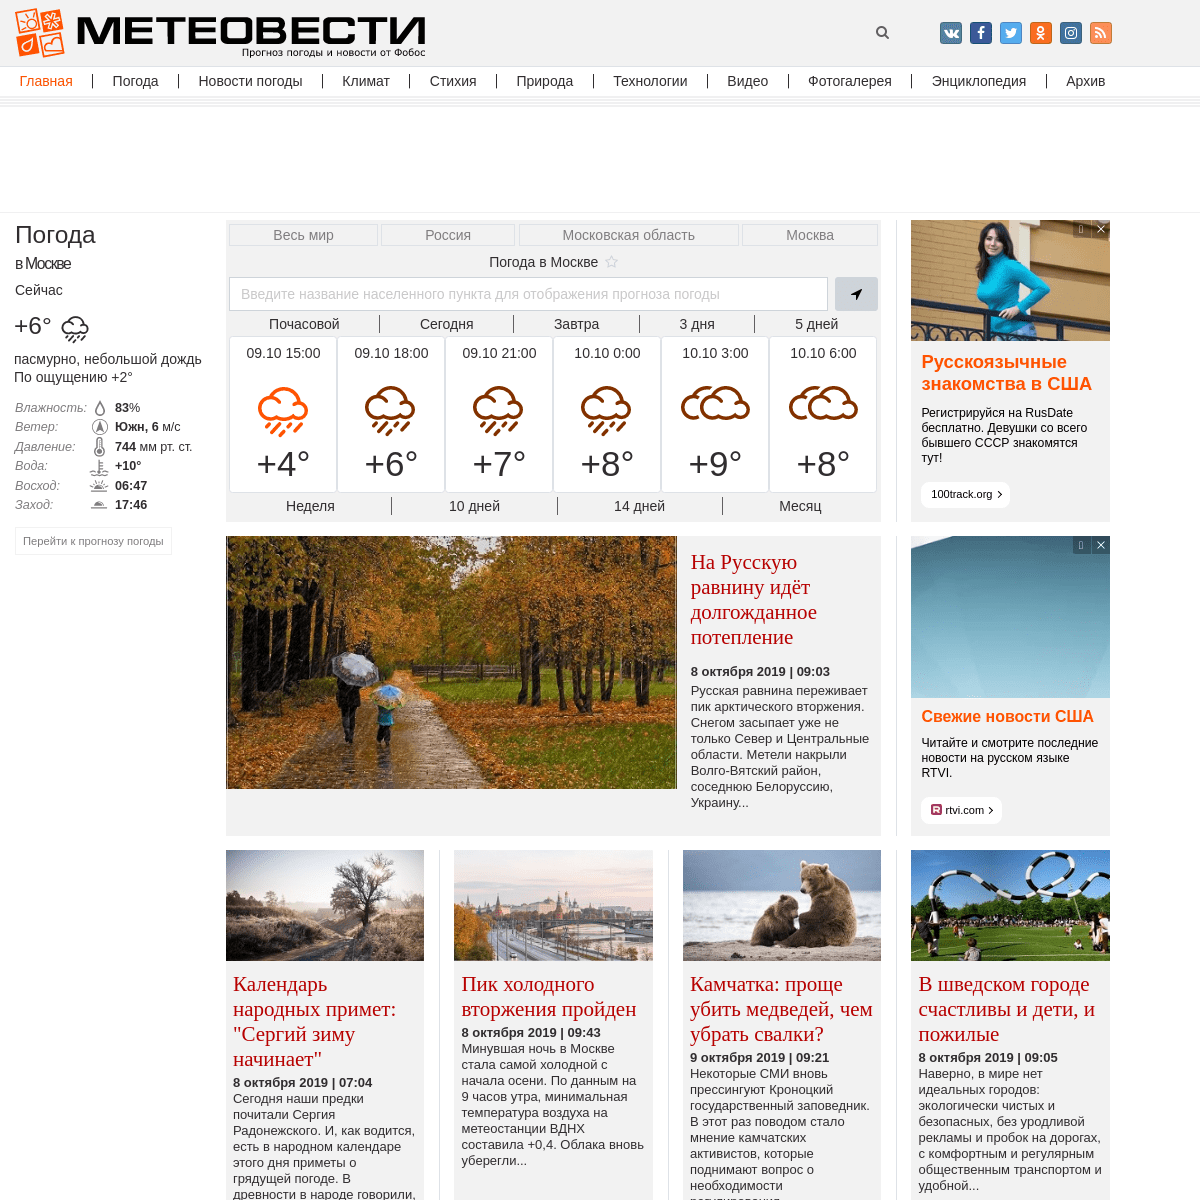 A complete backup of meteovesti.ru